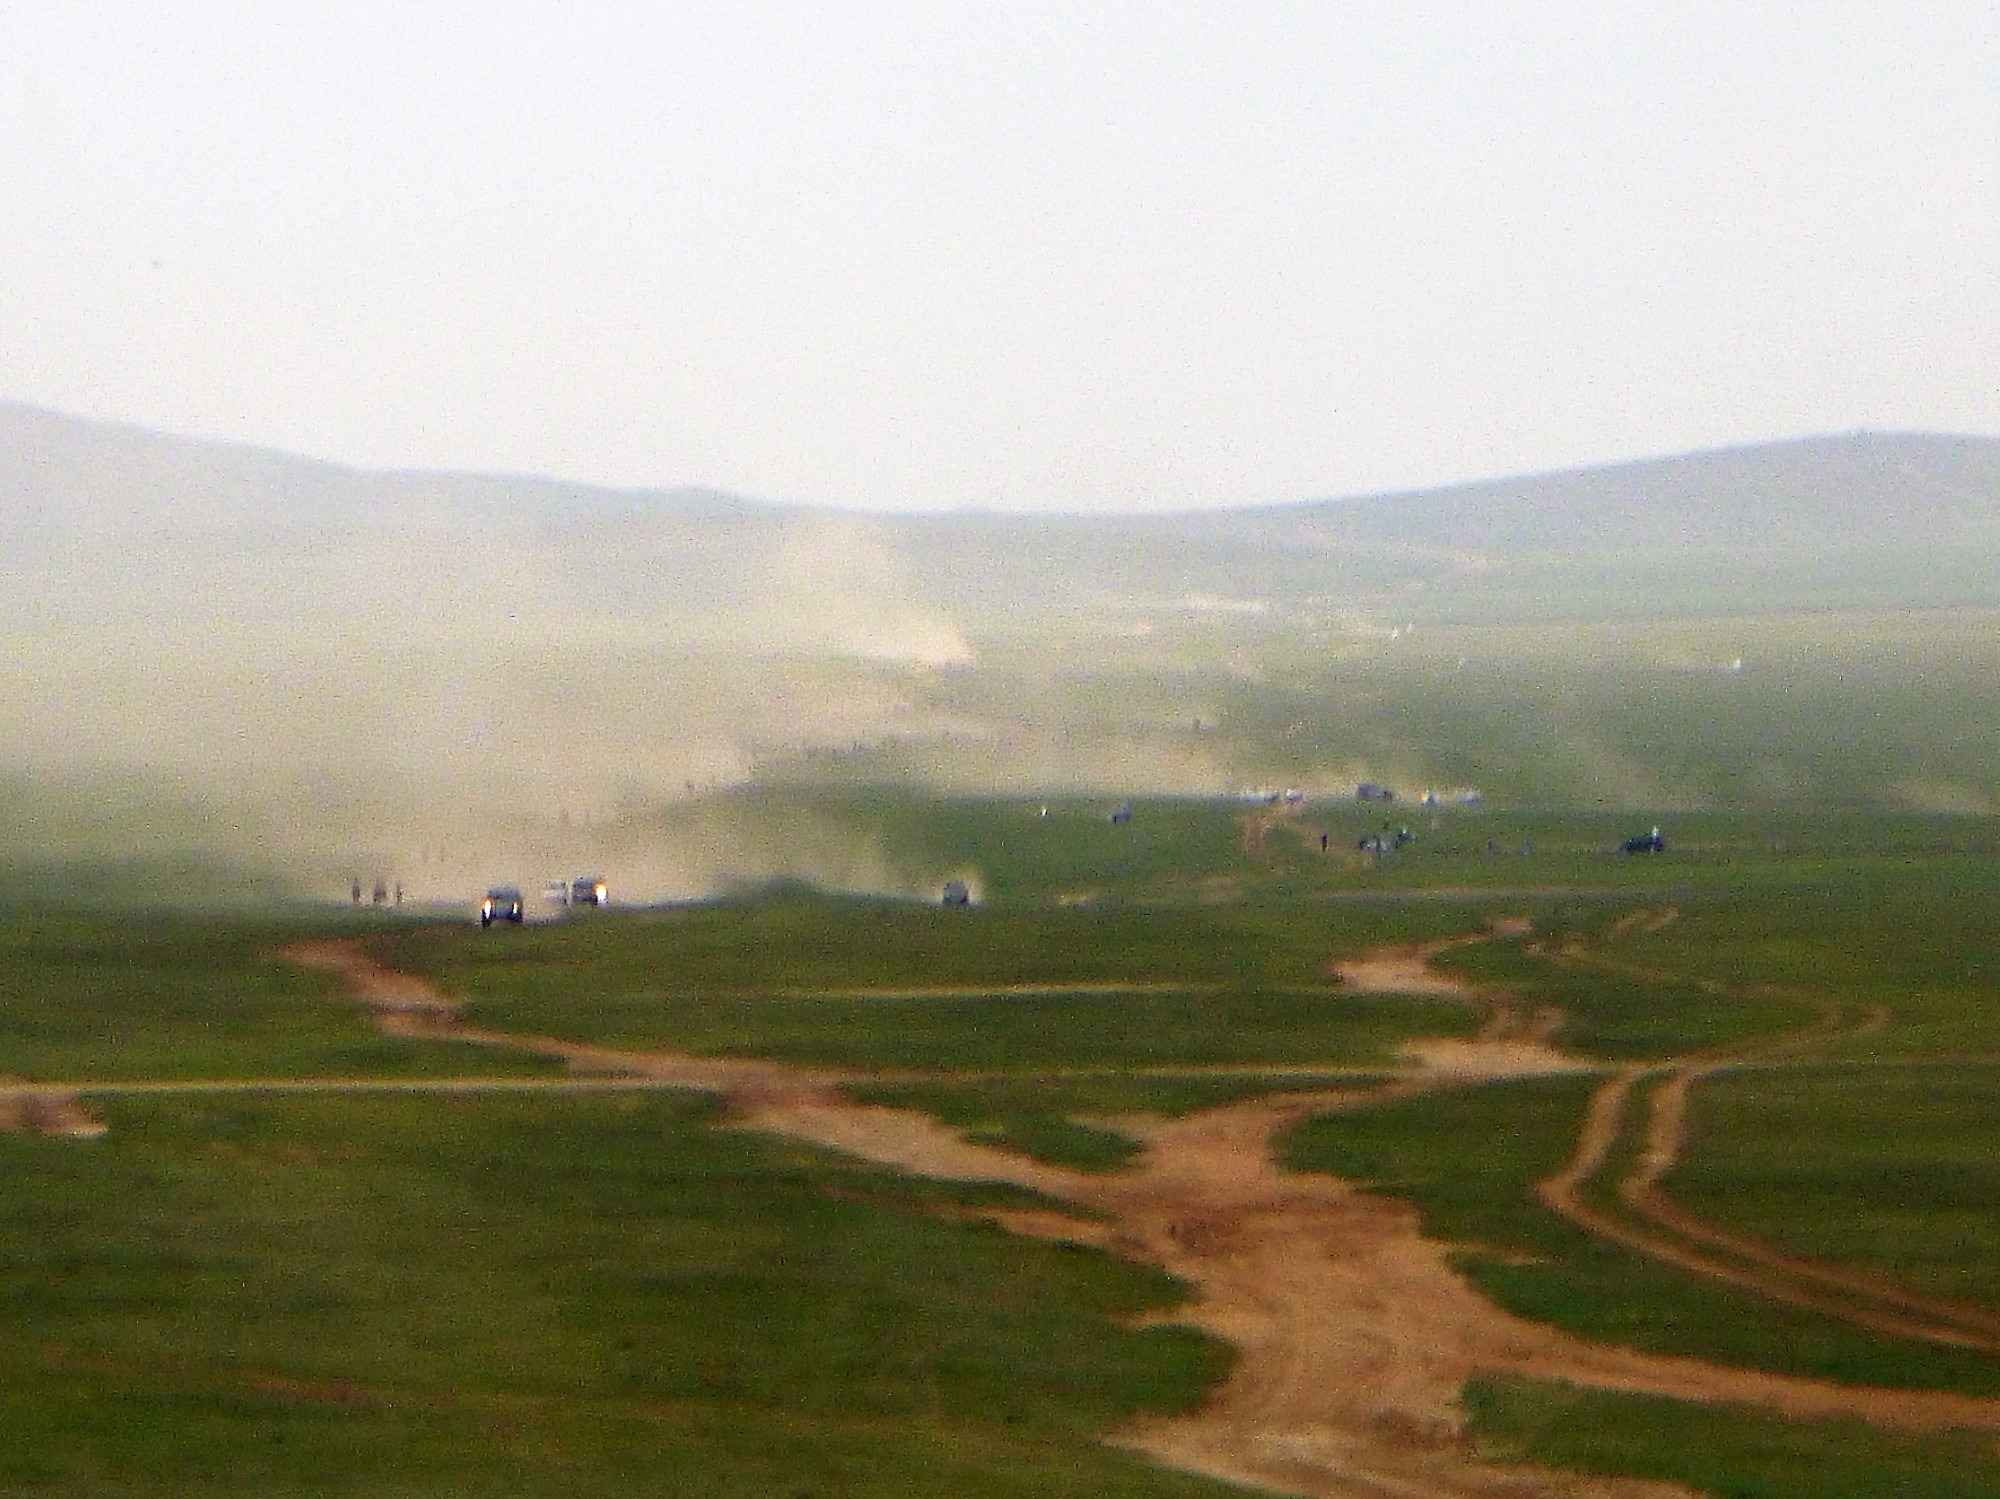 Khui Doloon Khudag, Монголия